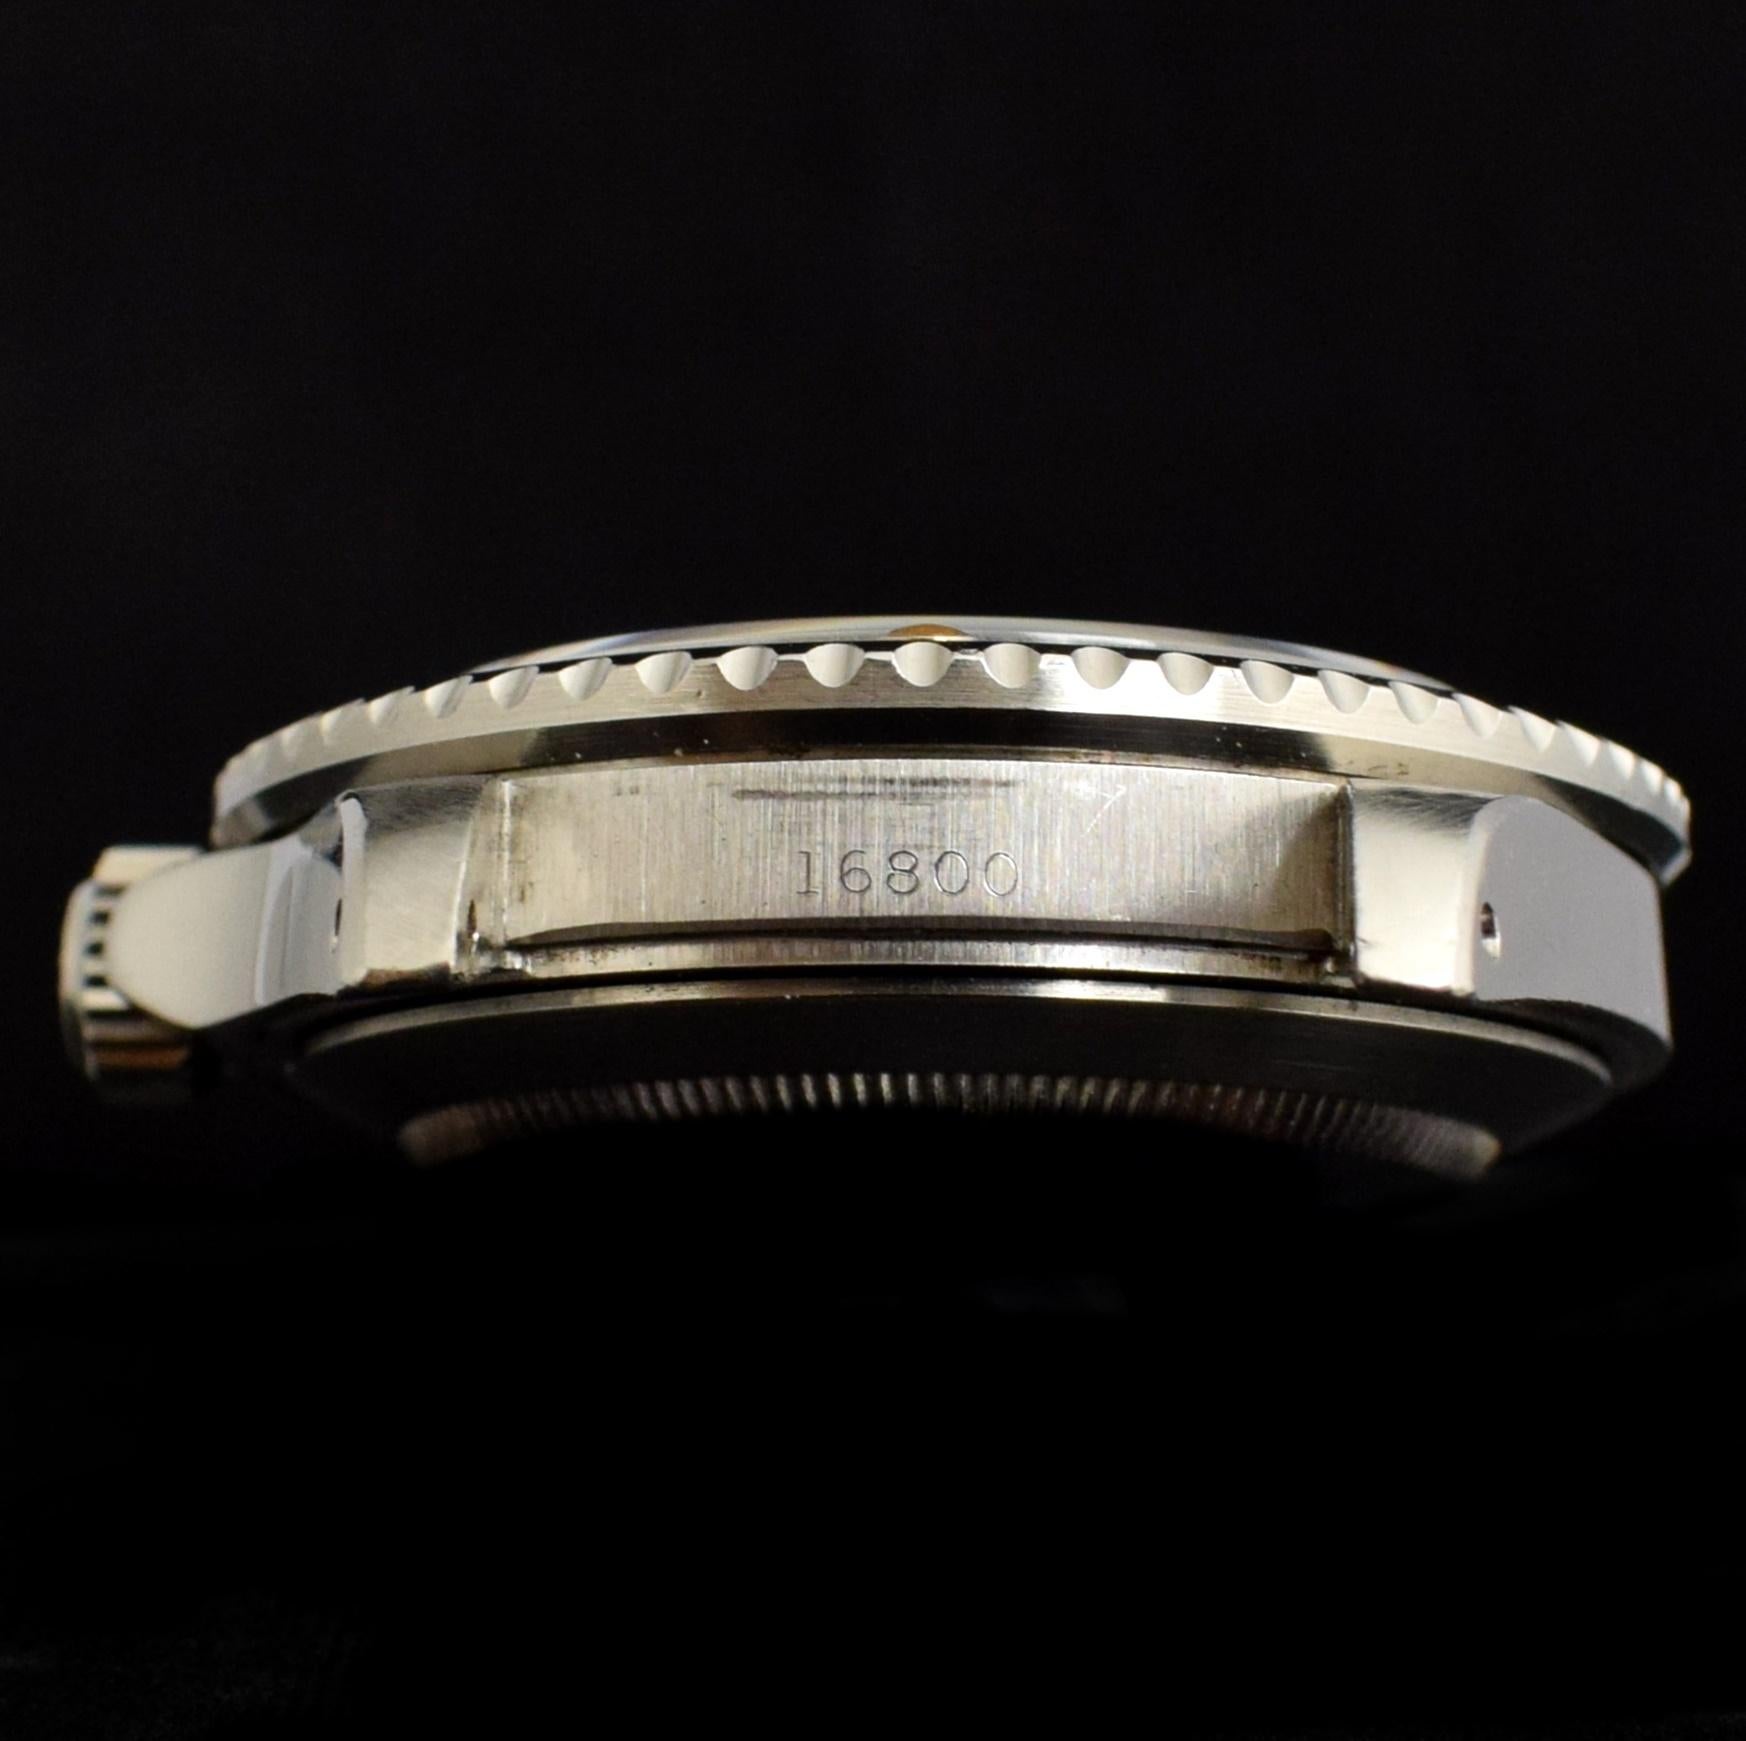 Rolex Submariner Matte Black Dial Creamy 16800 Steel Automatic Watch 1981 2